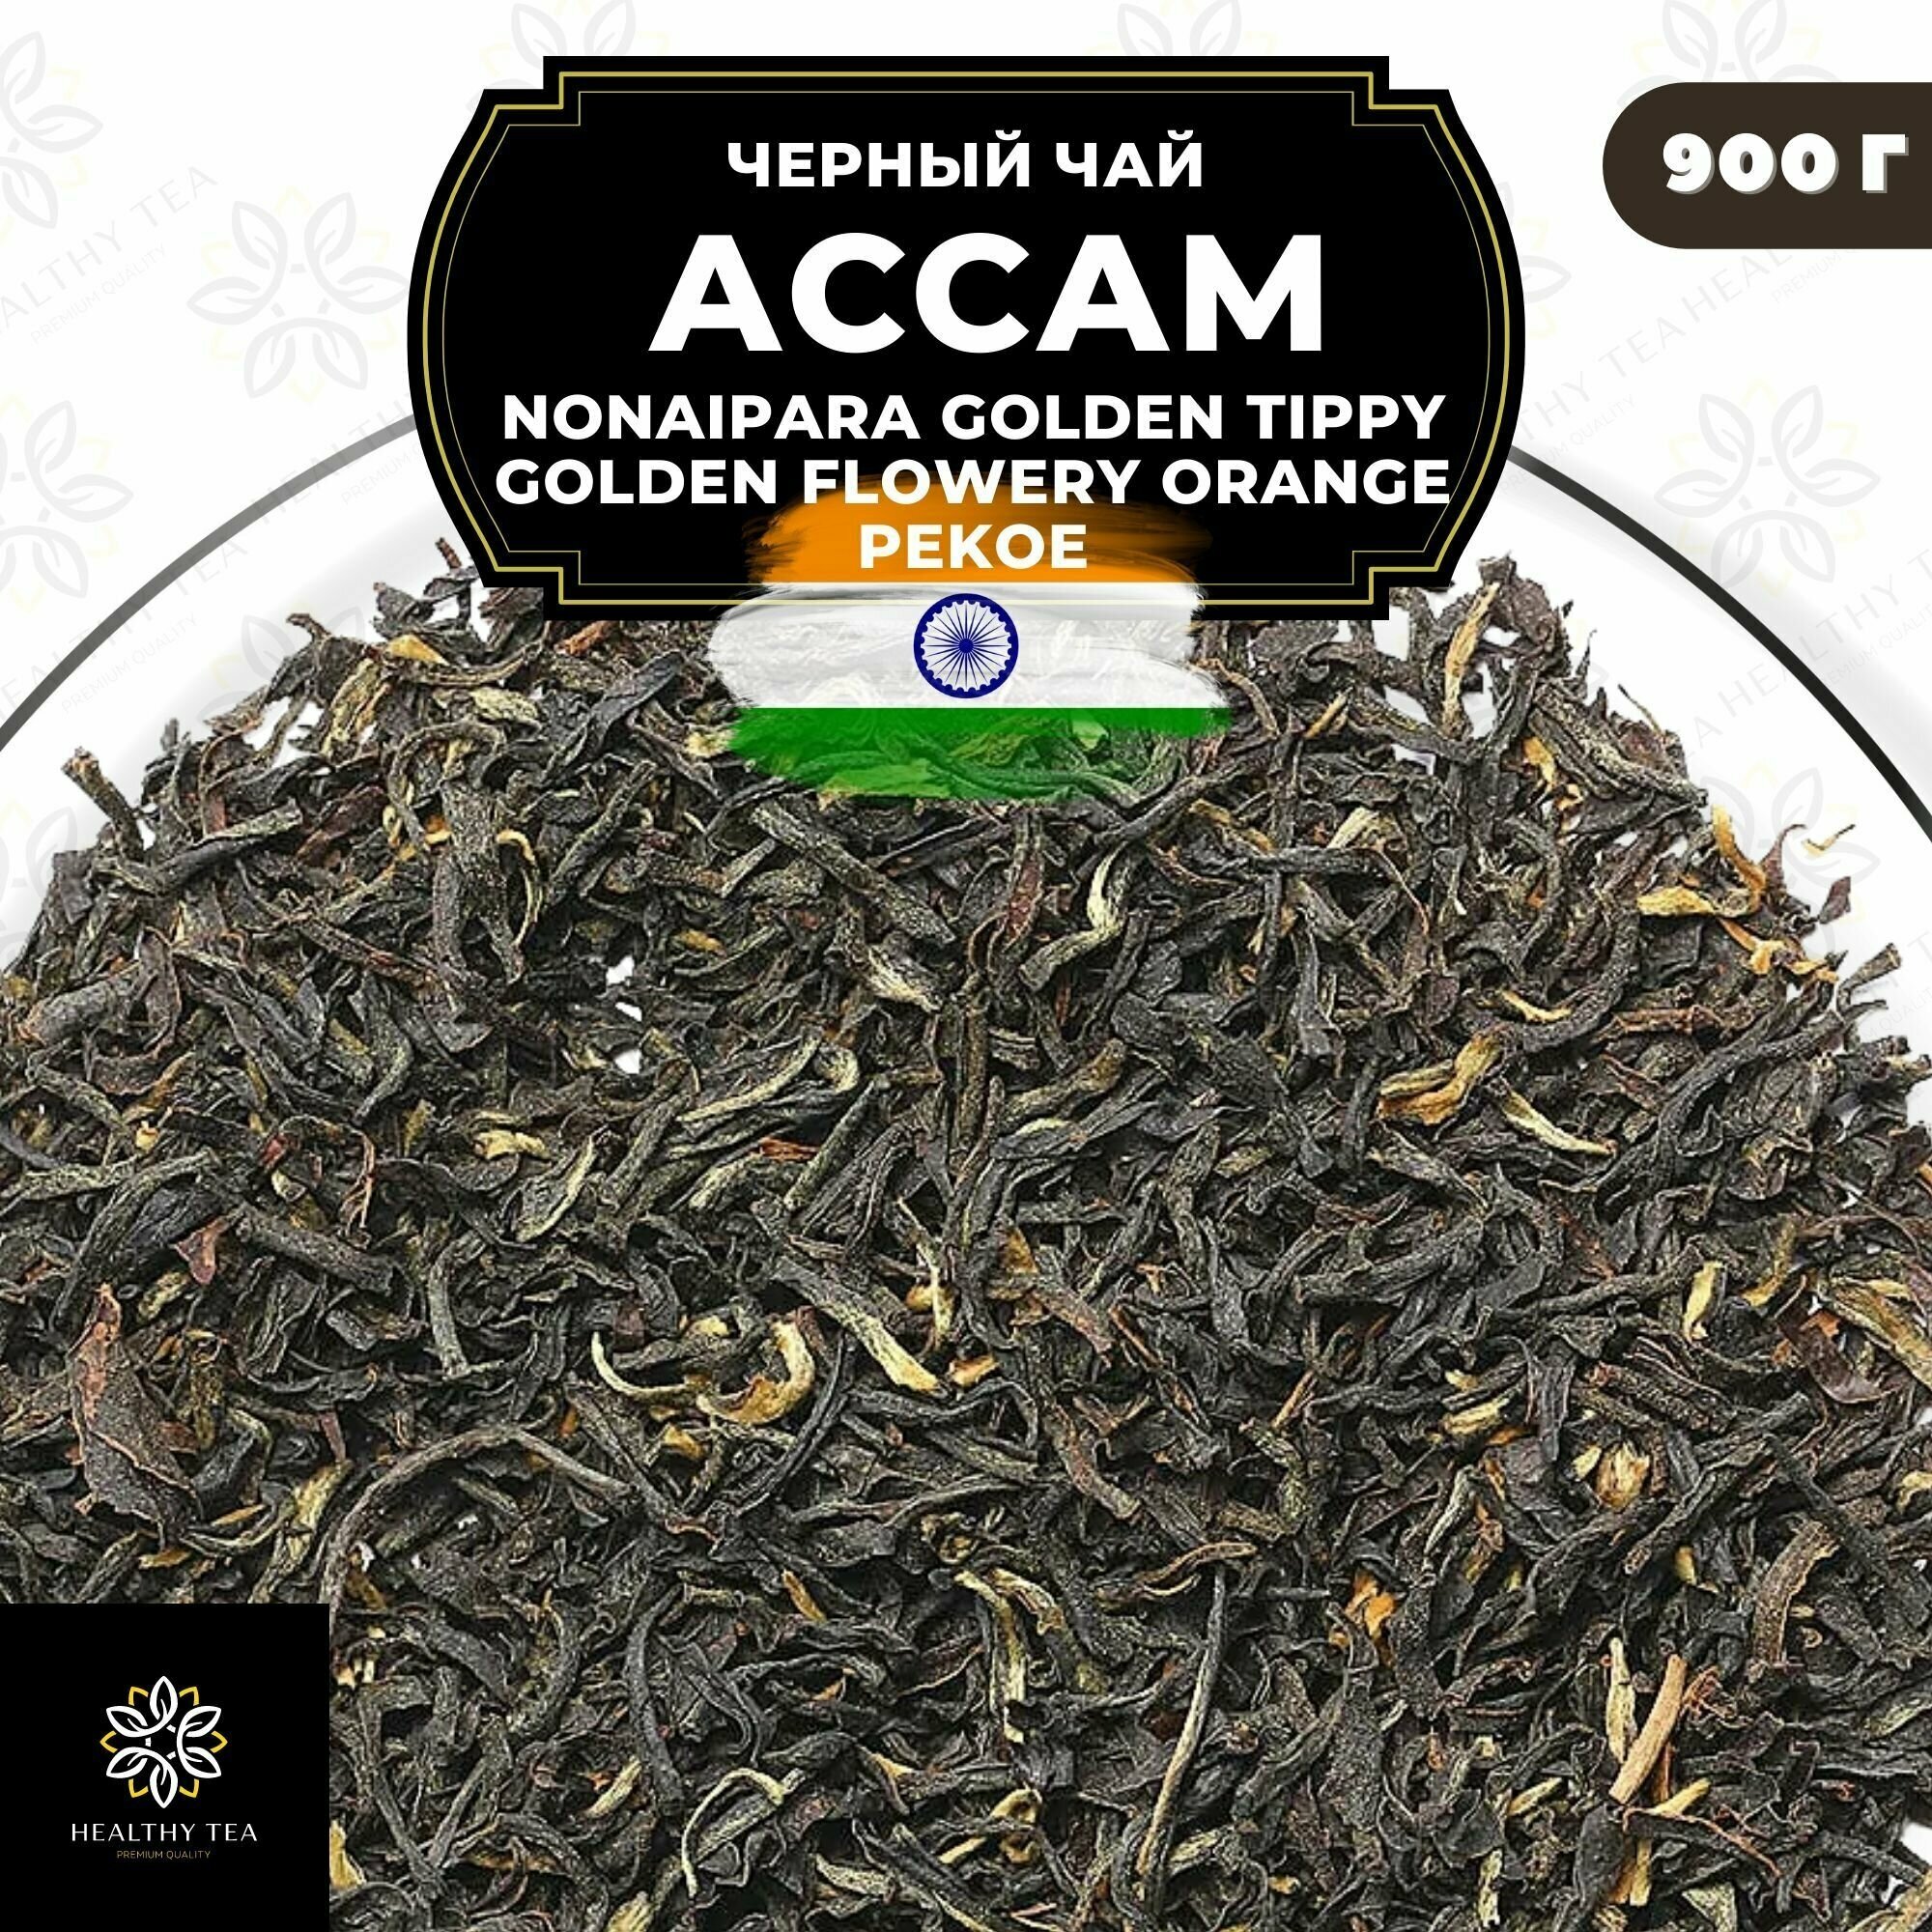 Черный чай Ассам (Nonaipara GTGFOP) Полезный чай / HEALTHY TEA, 900 гр